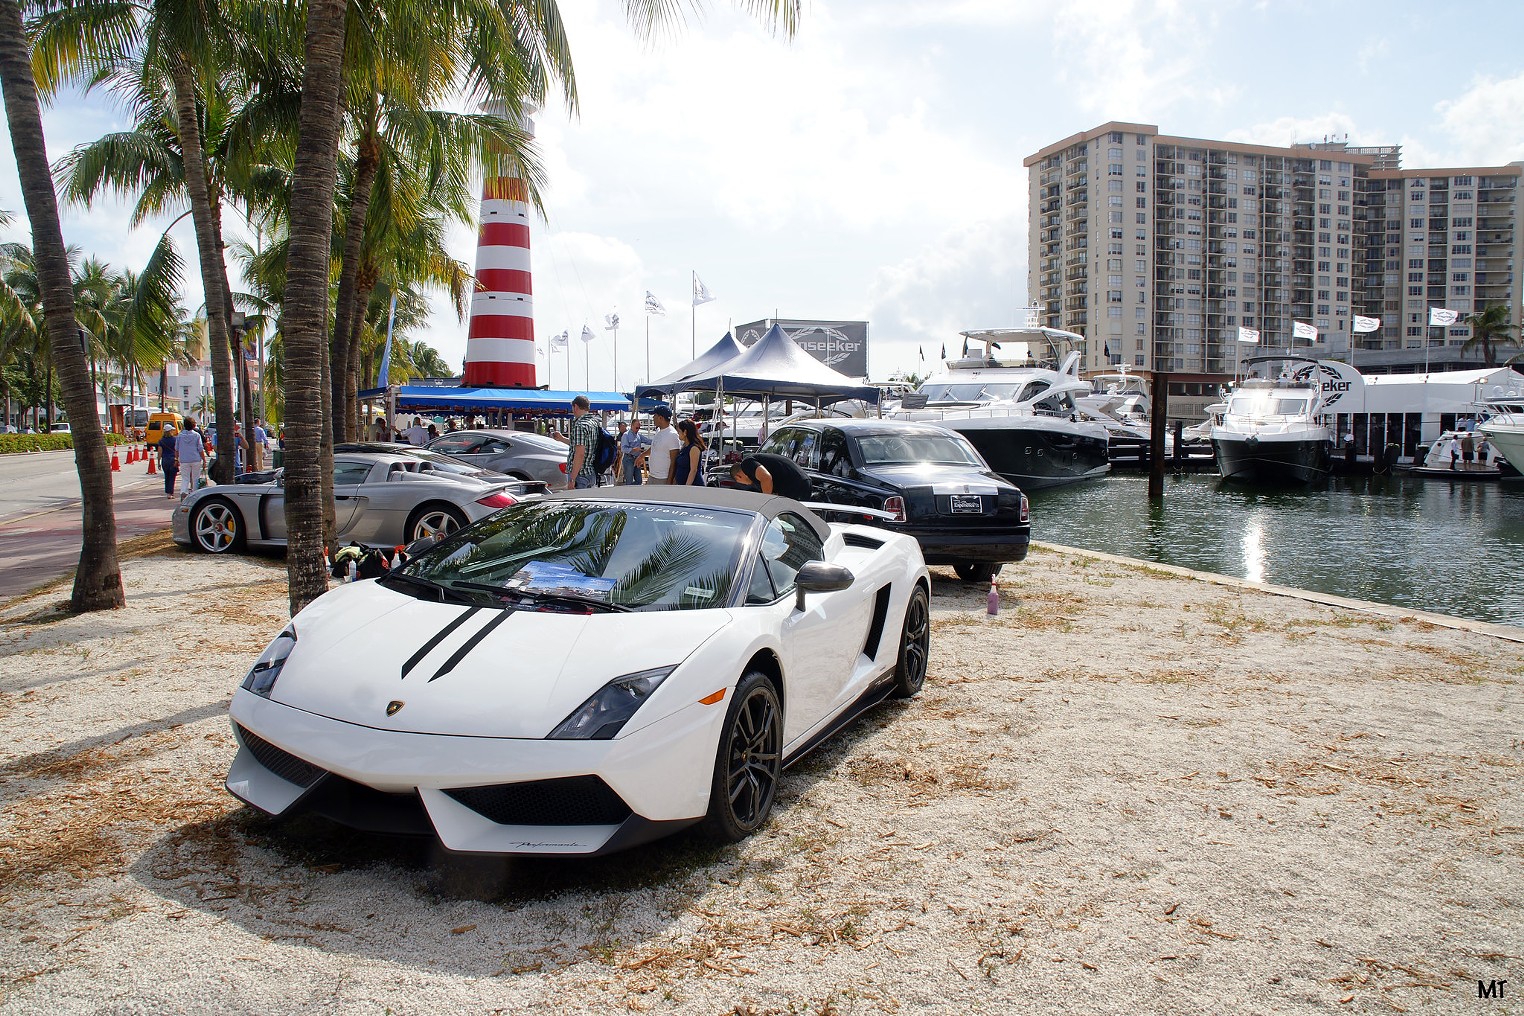 Average Salary in Miami Report Says 3 Percent Make Six Figures Miami